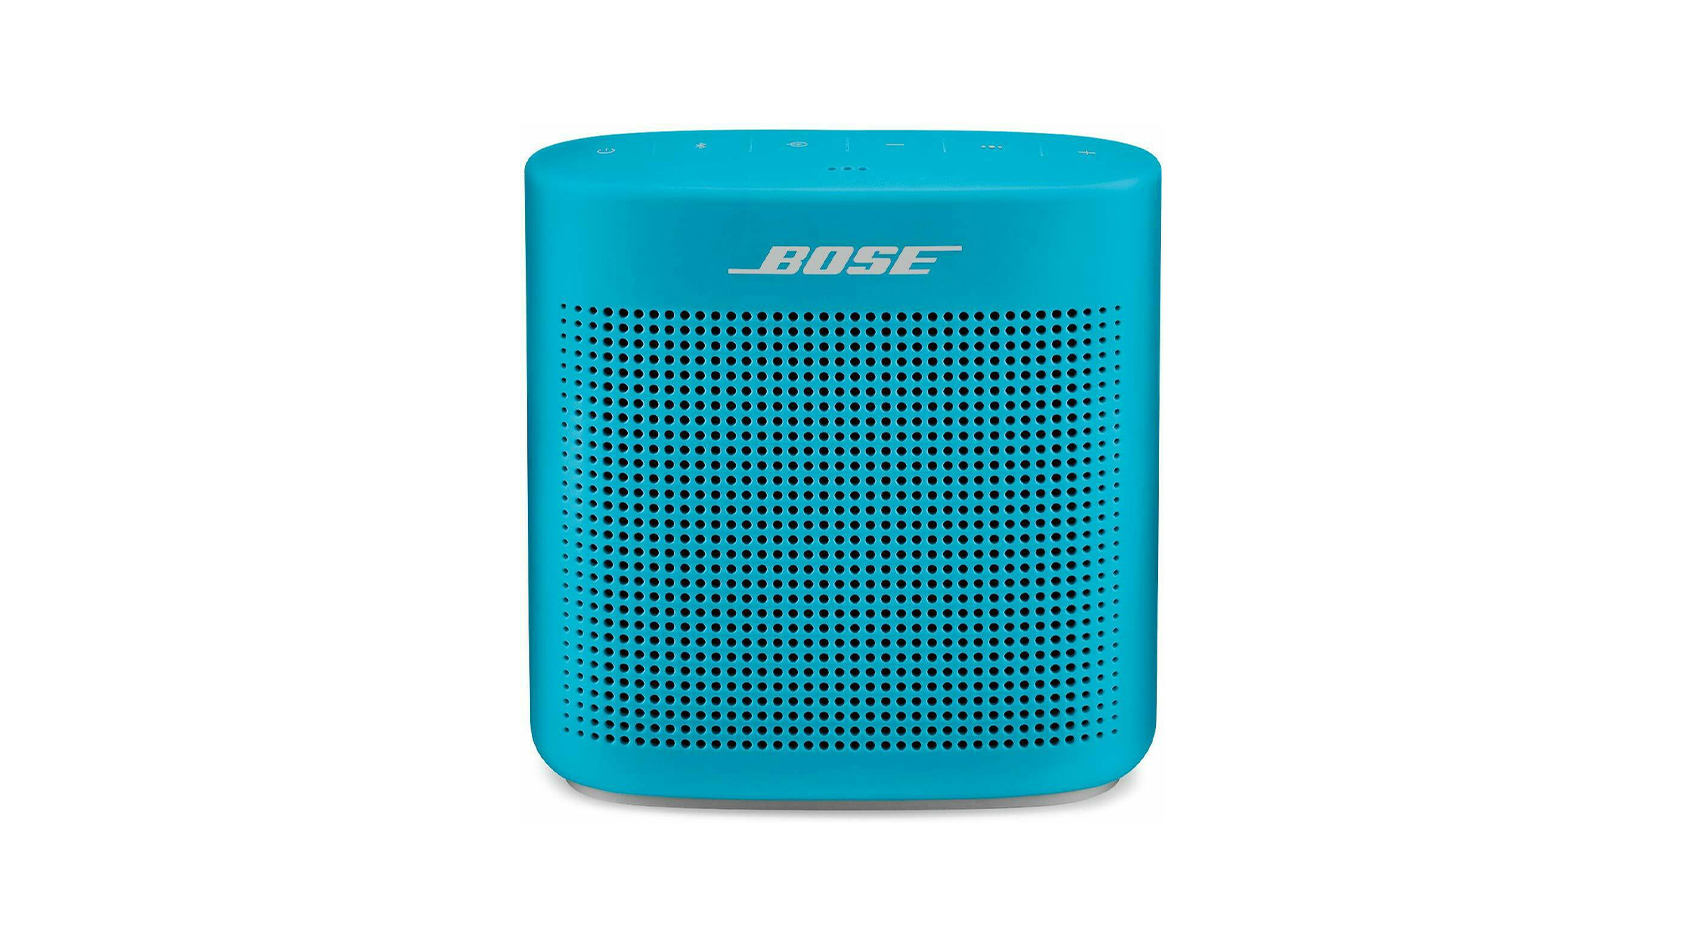 Enceinte bluetooth portable Bose Soundlink Color II assistant